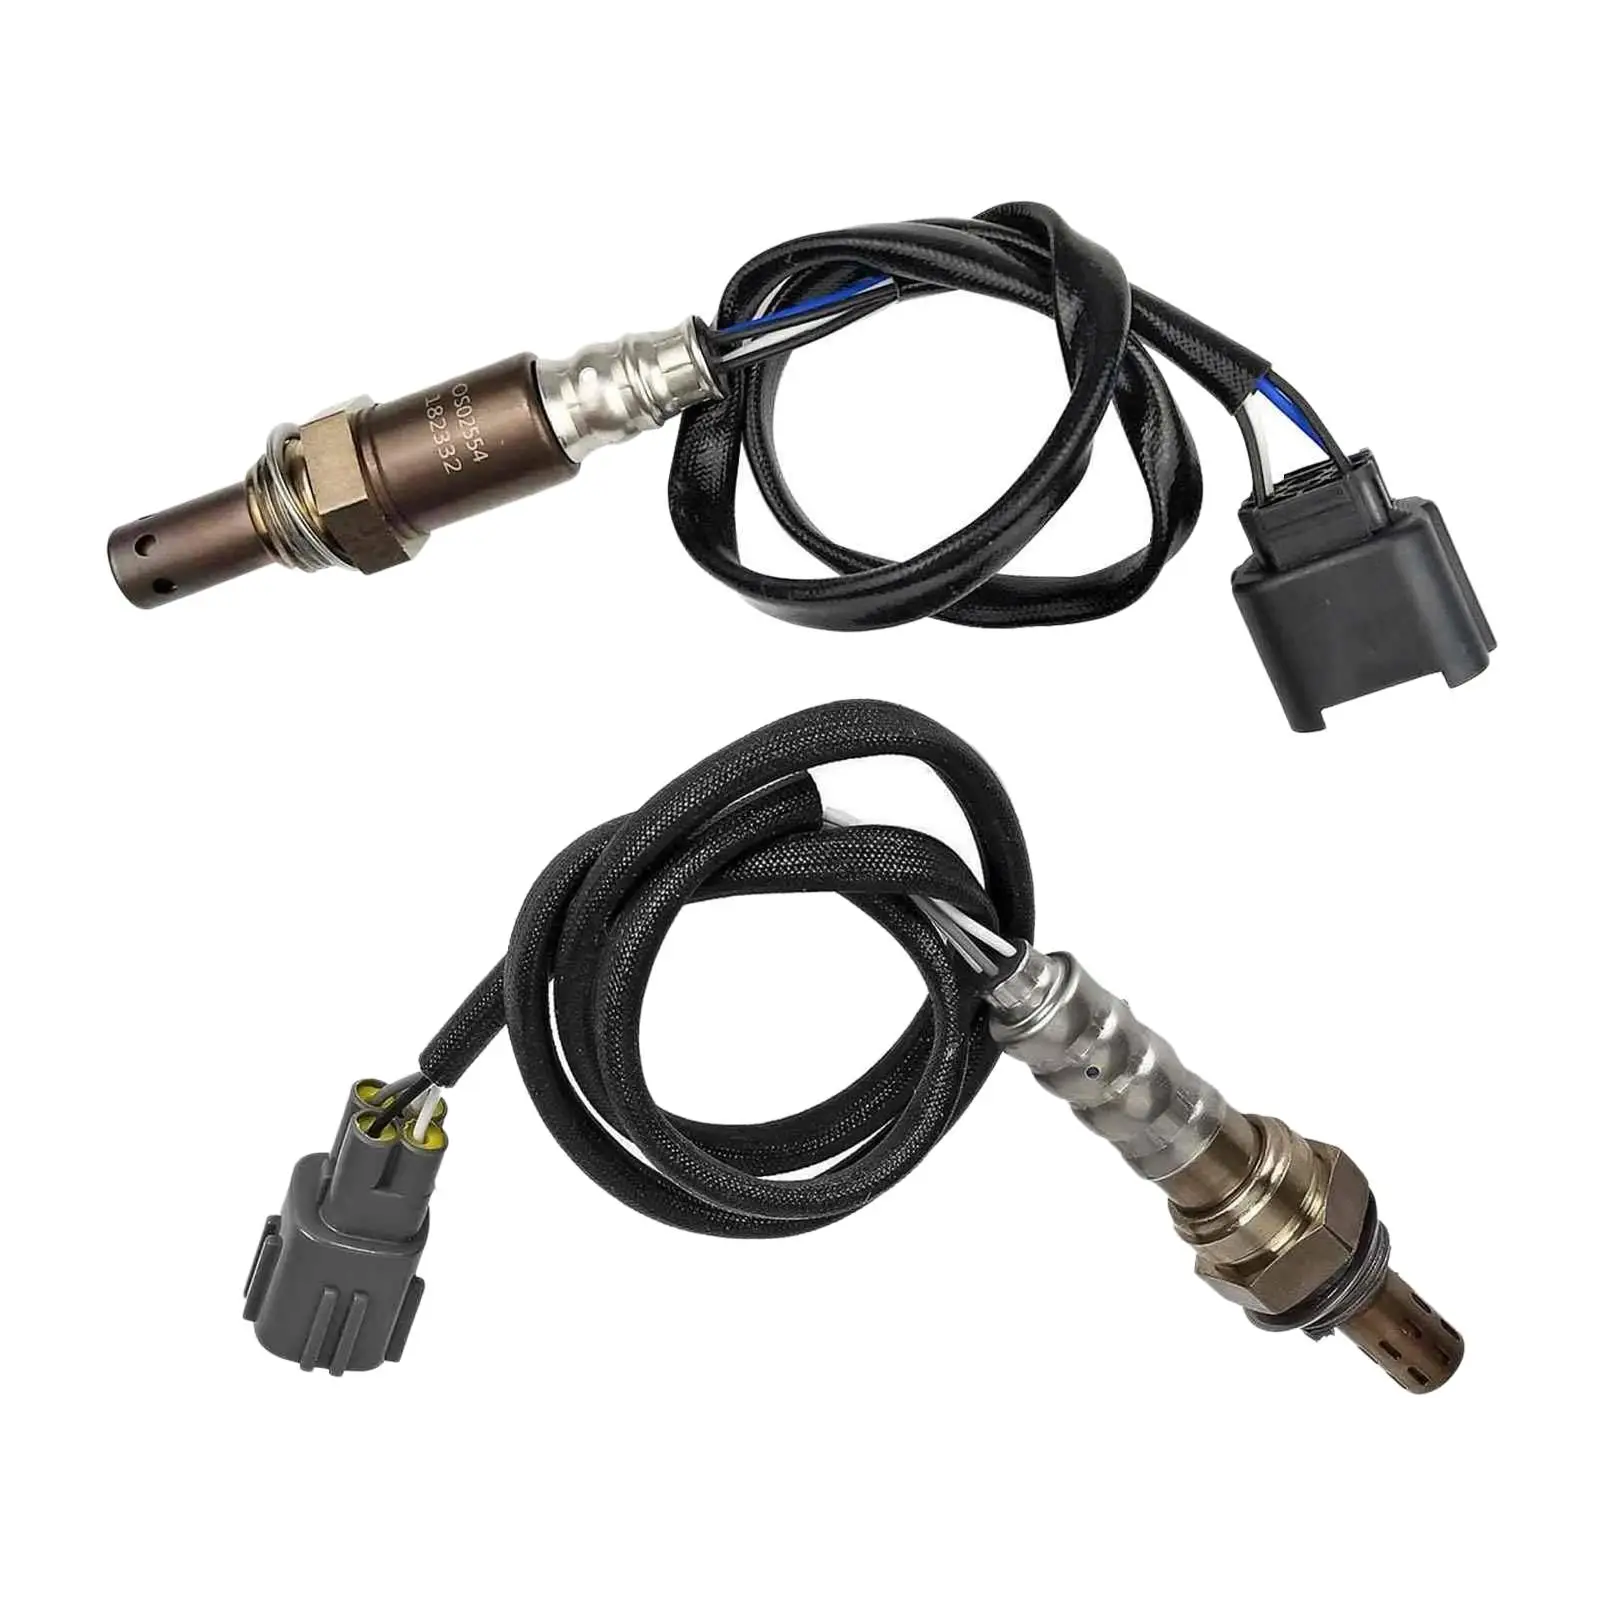 Set of-Downstream Oxygen Sensor Easy Installation Replaces O2 Sensor Fit for Impreza 2.5L H4 06-2011 234-4445 234-9123